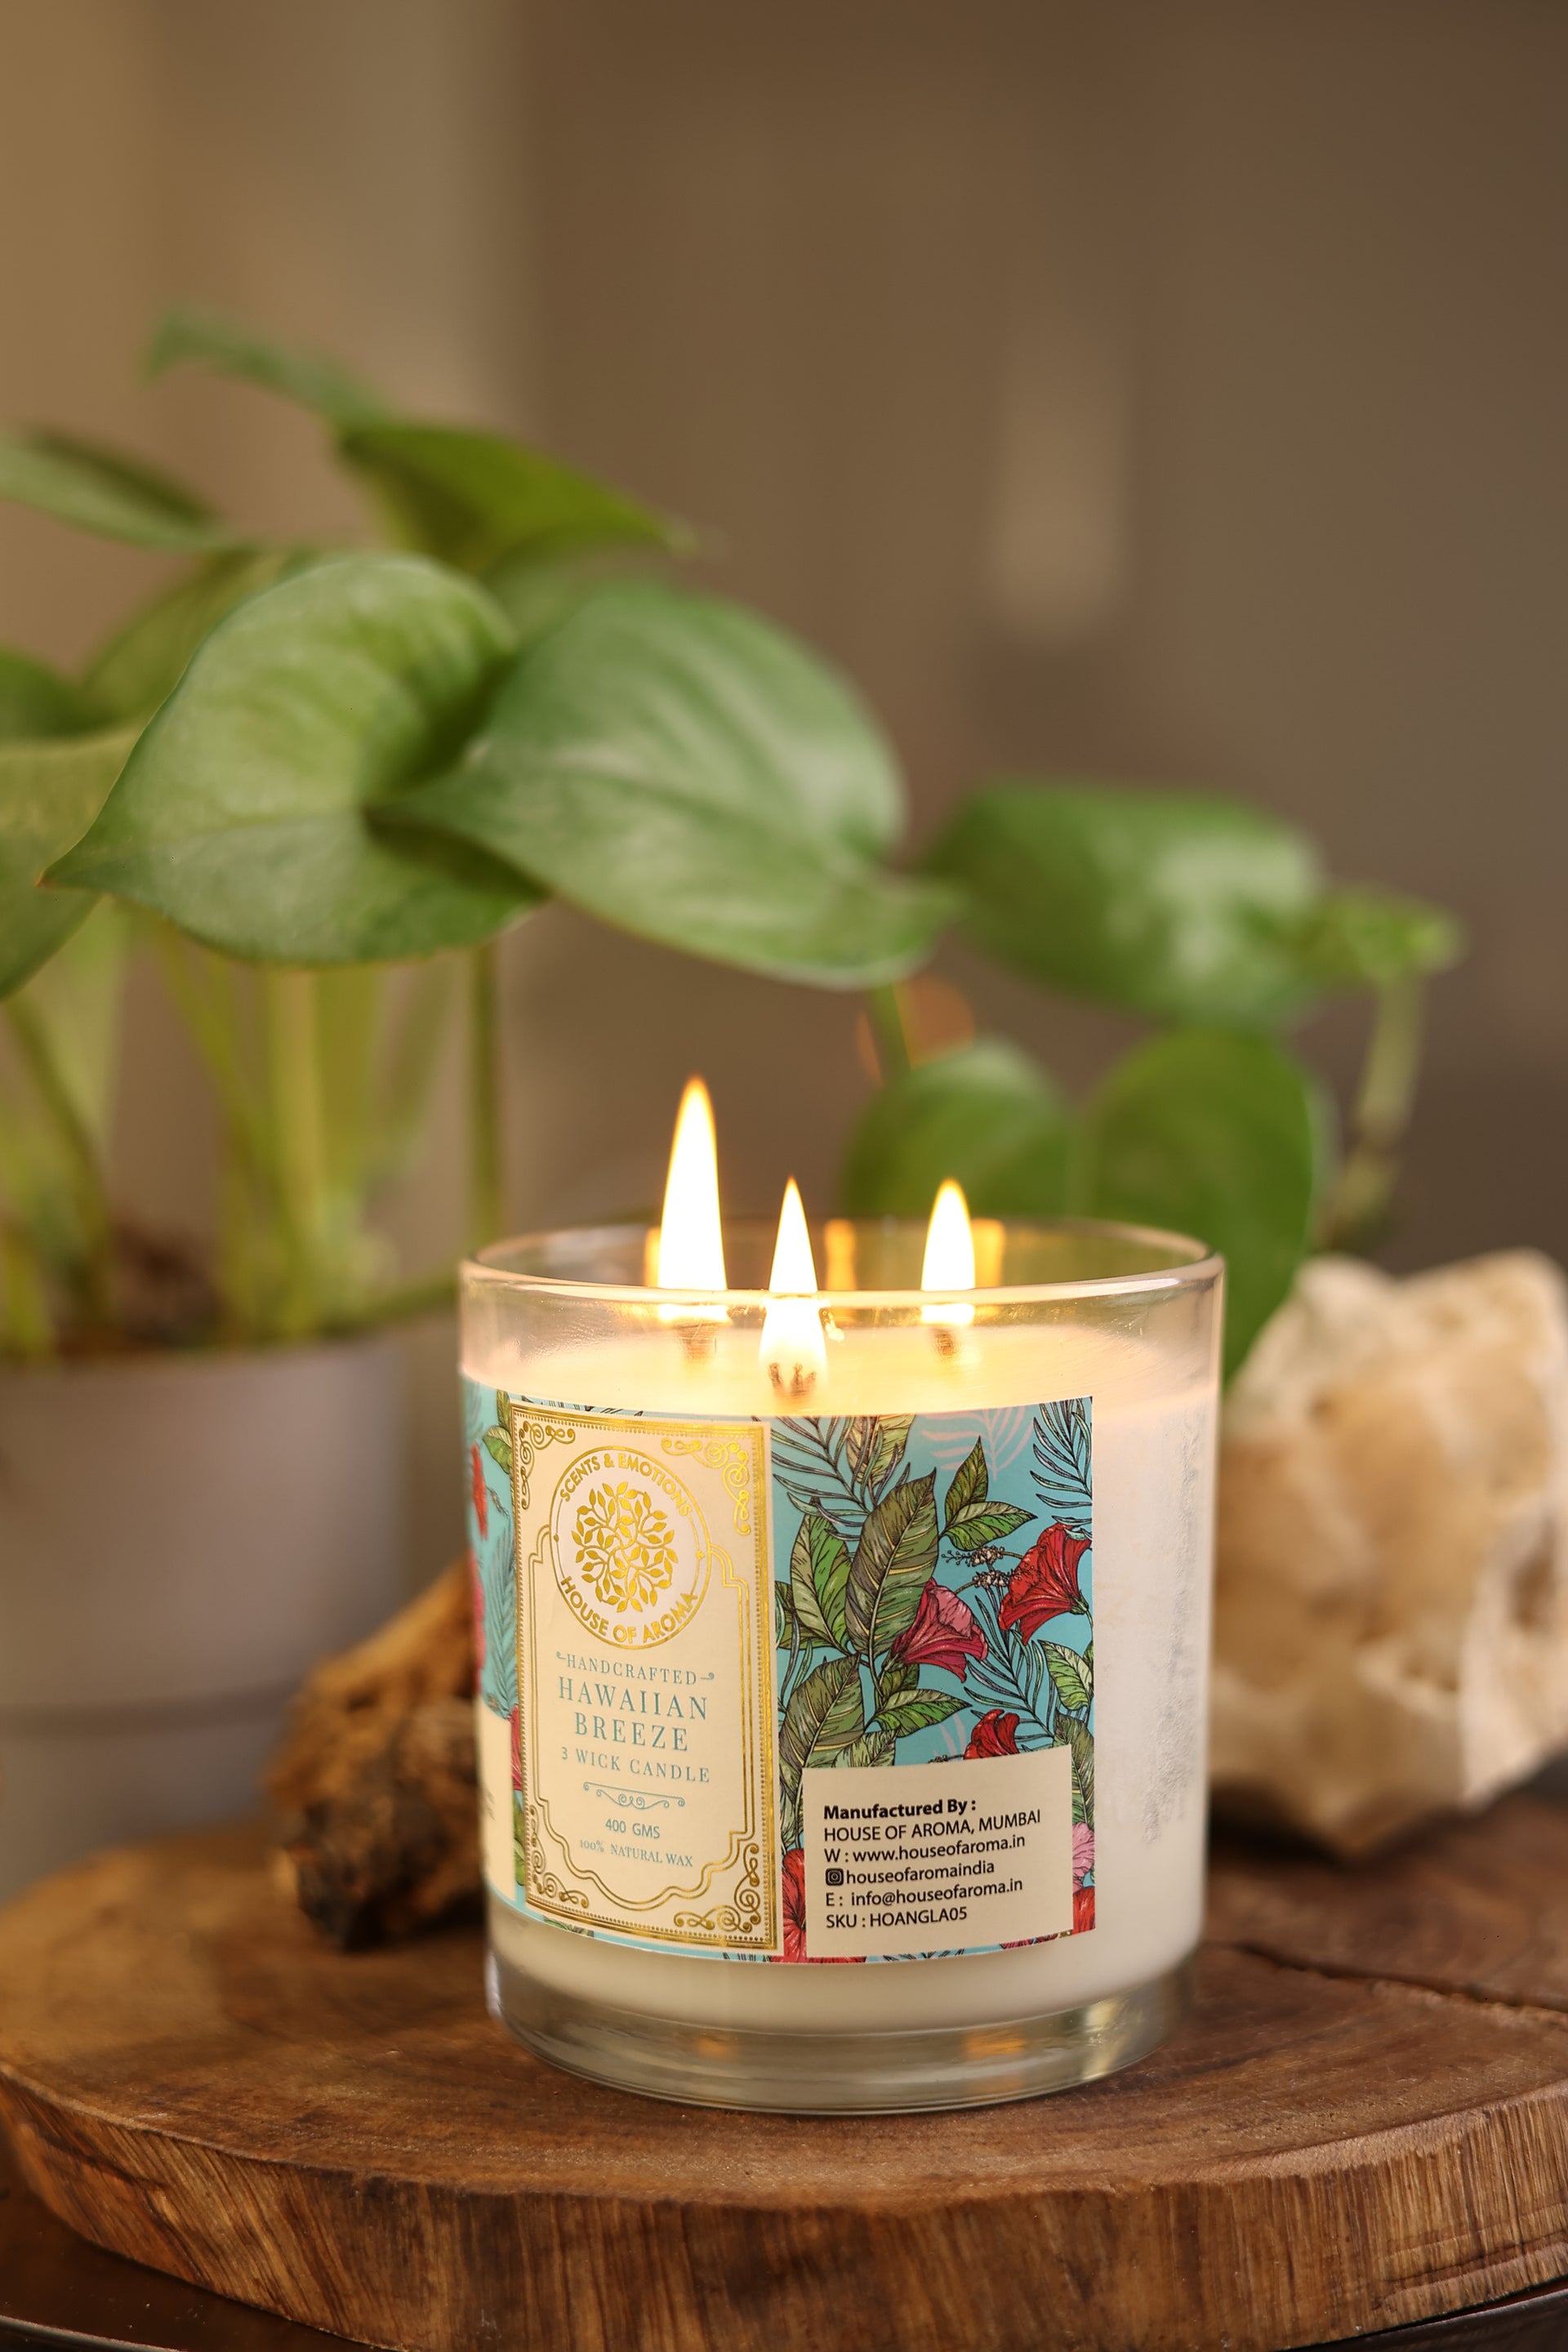 P&j Fragrance Oil Hawaiian Set | Hibiscus, Island Life, Hawaiian Ginger, Tropical Breeze, Plumeria, Aloe Candle Scents for Candle Making, Freshie